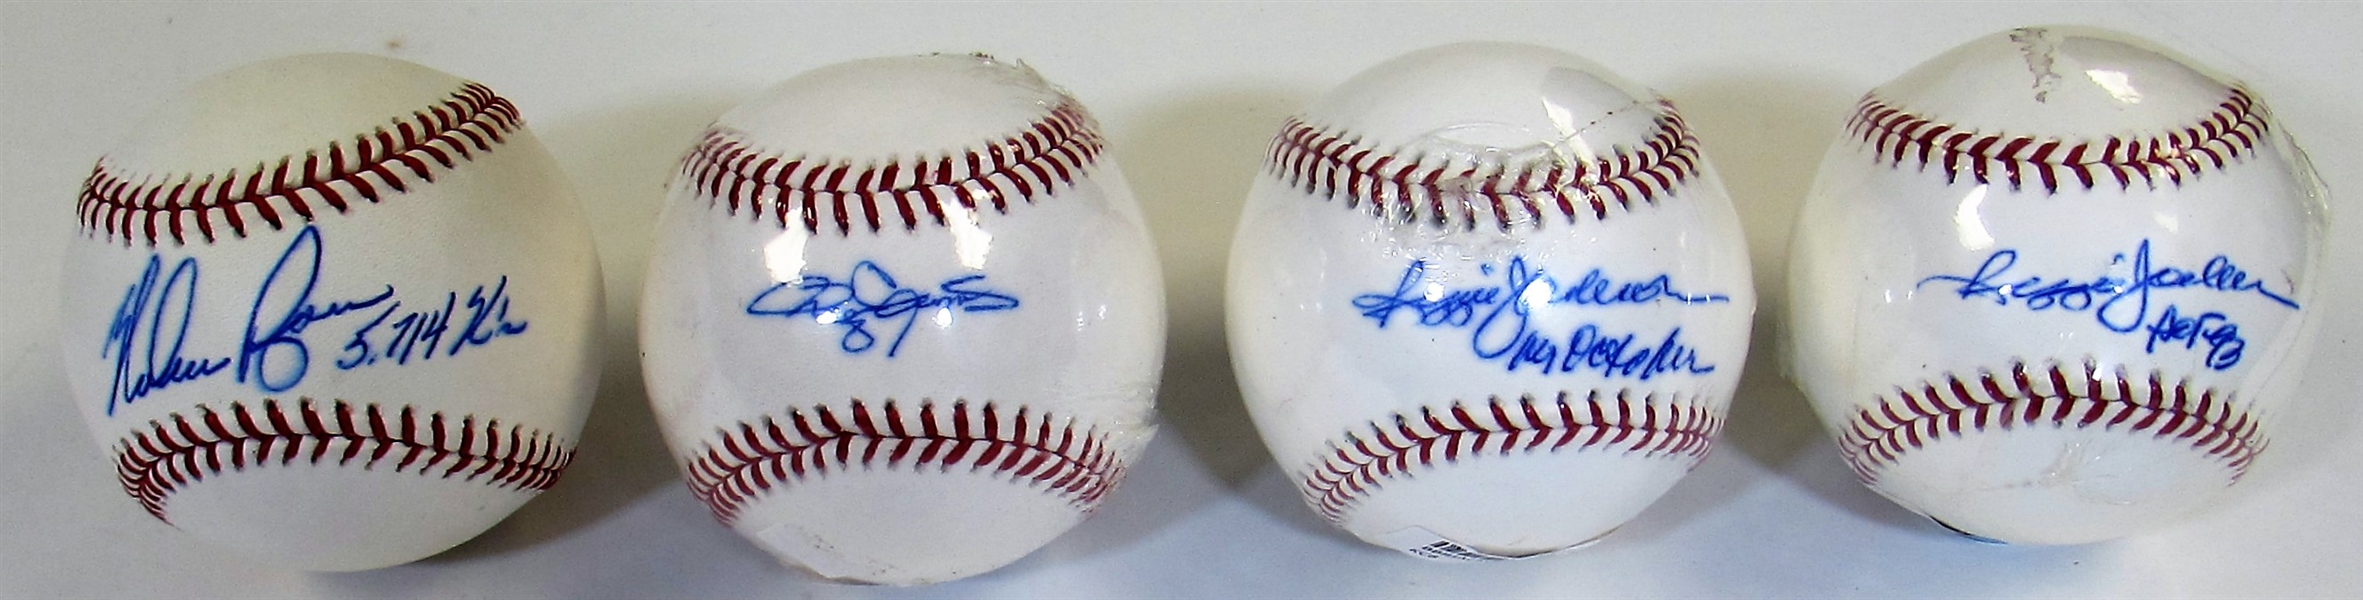 Roger Clemens-Nolan Ryan- Reggie Jackson x 2 Signed Baseballs